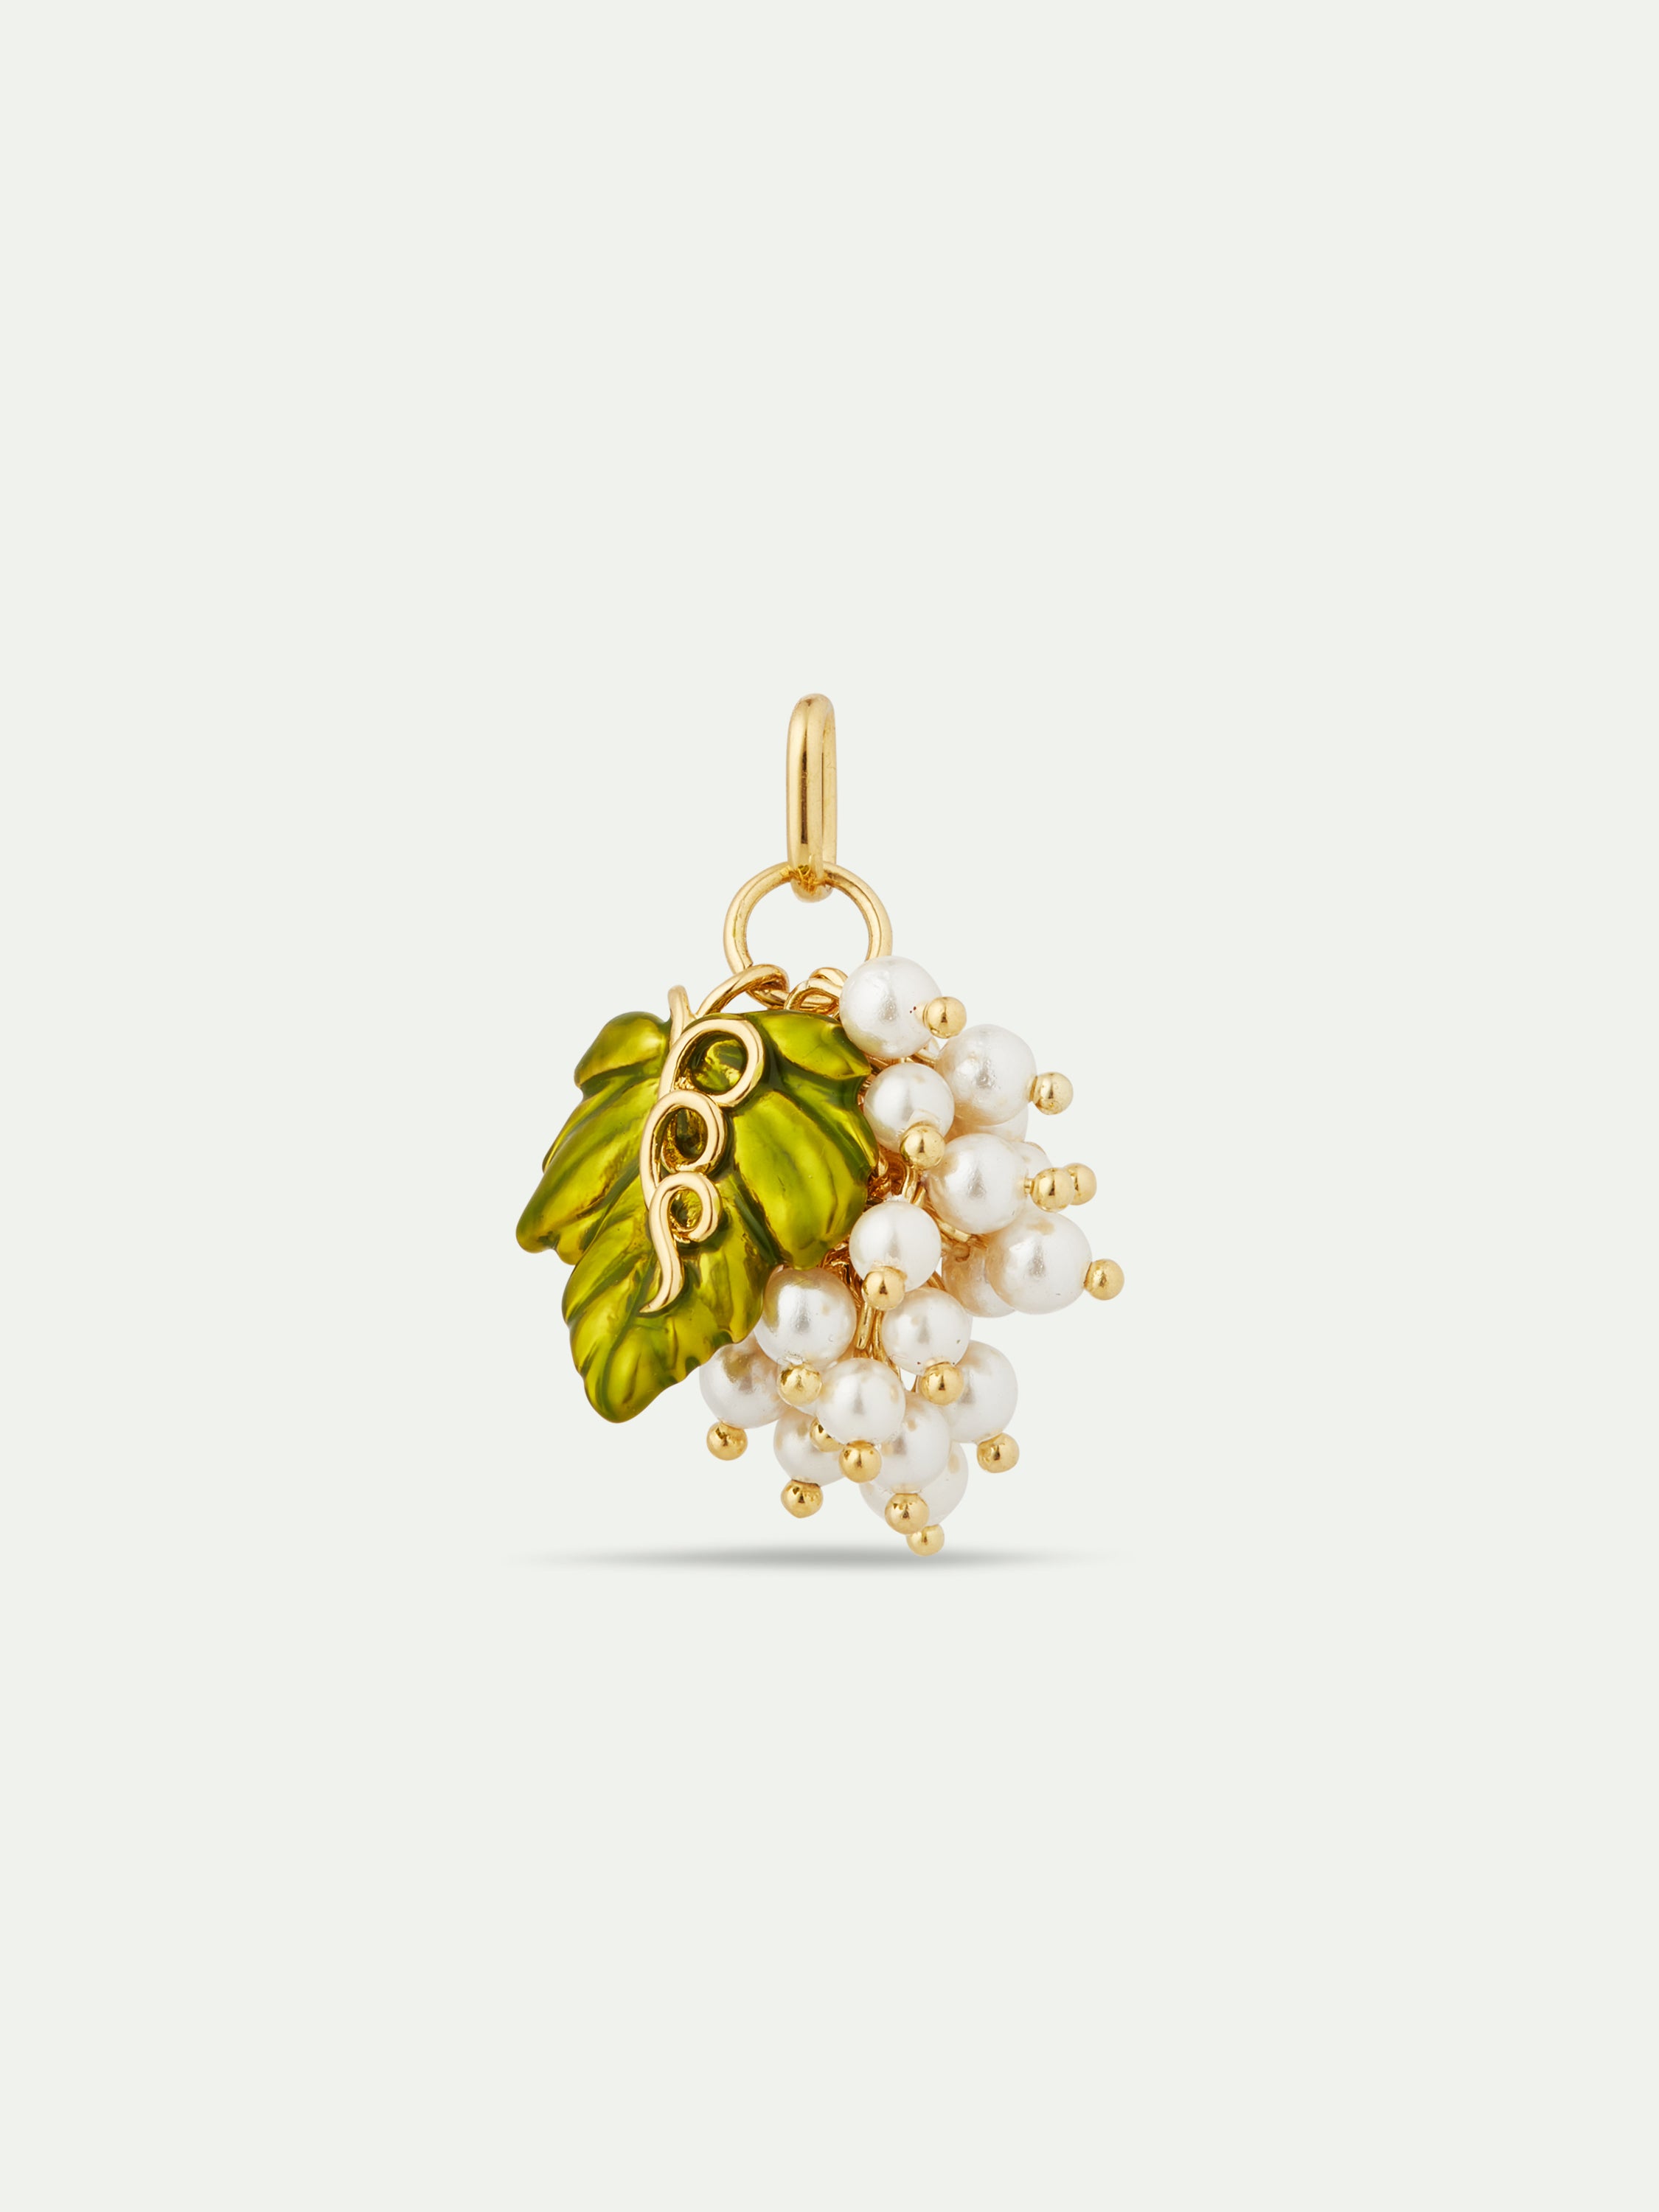 Grape pendant: Harmony and Prosperity